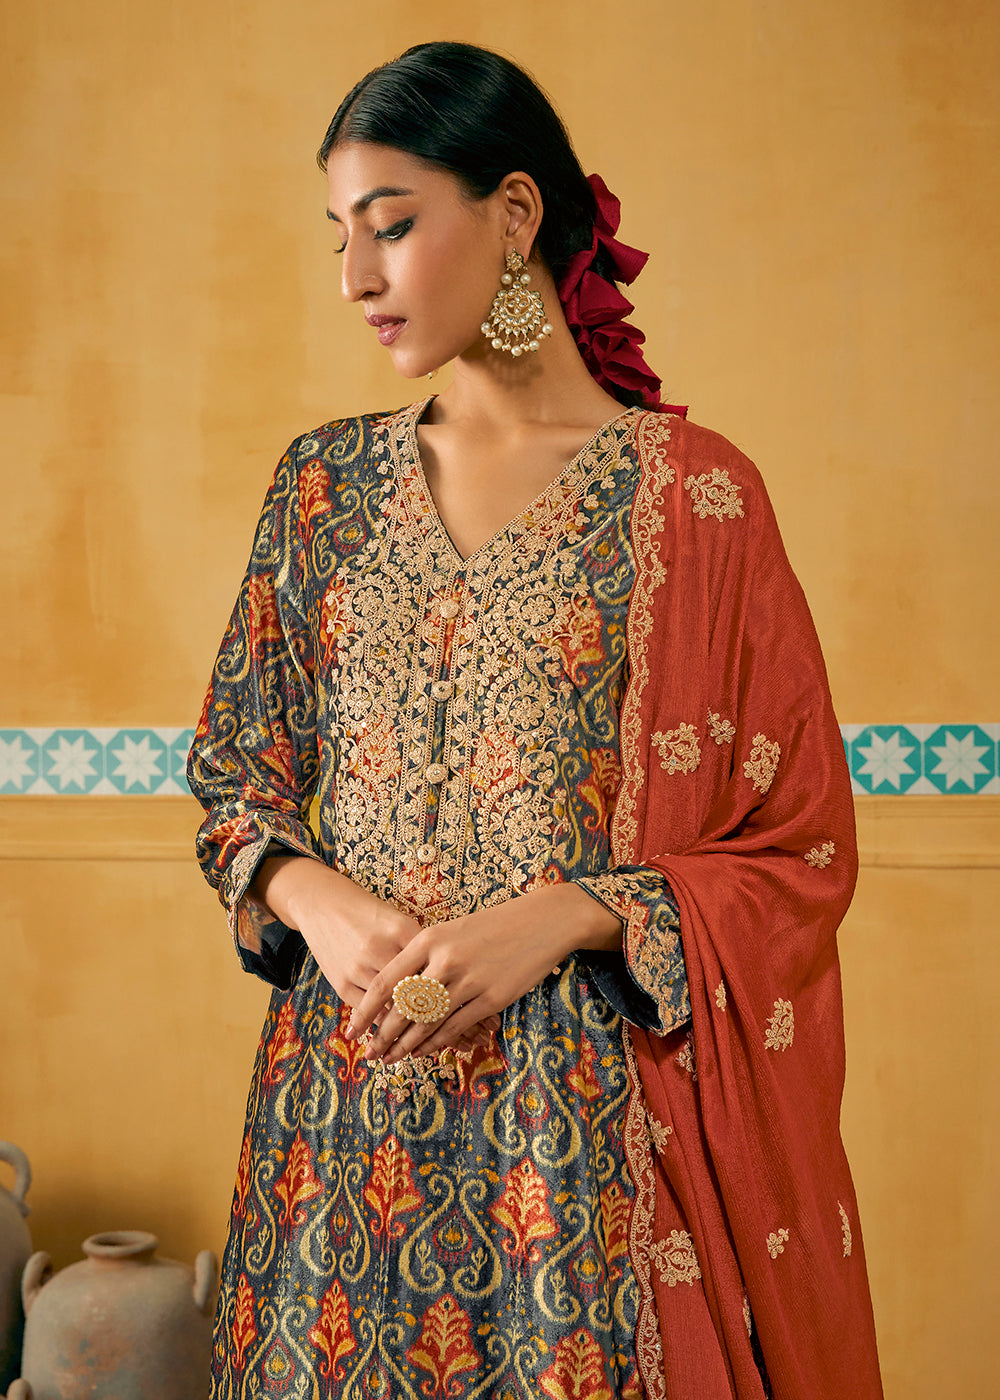 Buy Now Blue Multicolor Digital Printed Embroidered Velvet Salwar Suit Online in USA, UK, Canada, Germany, Australia & Worldwide at Empress Clothing. 